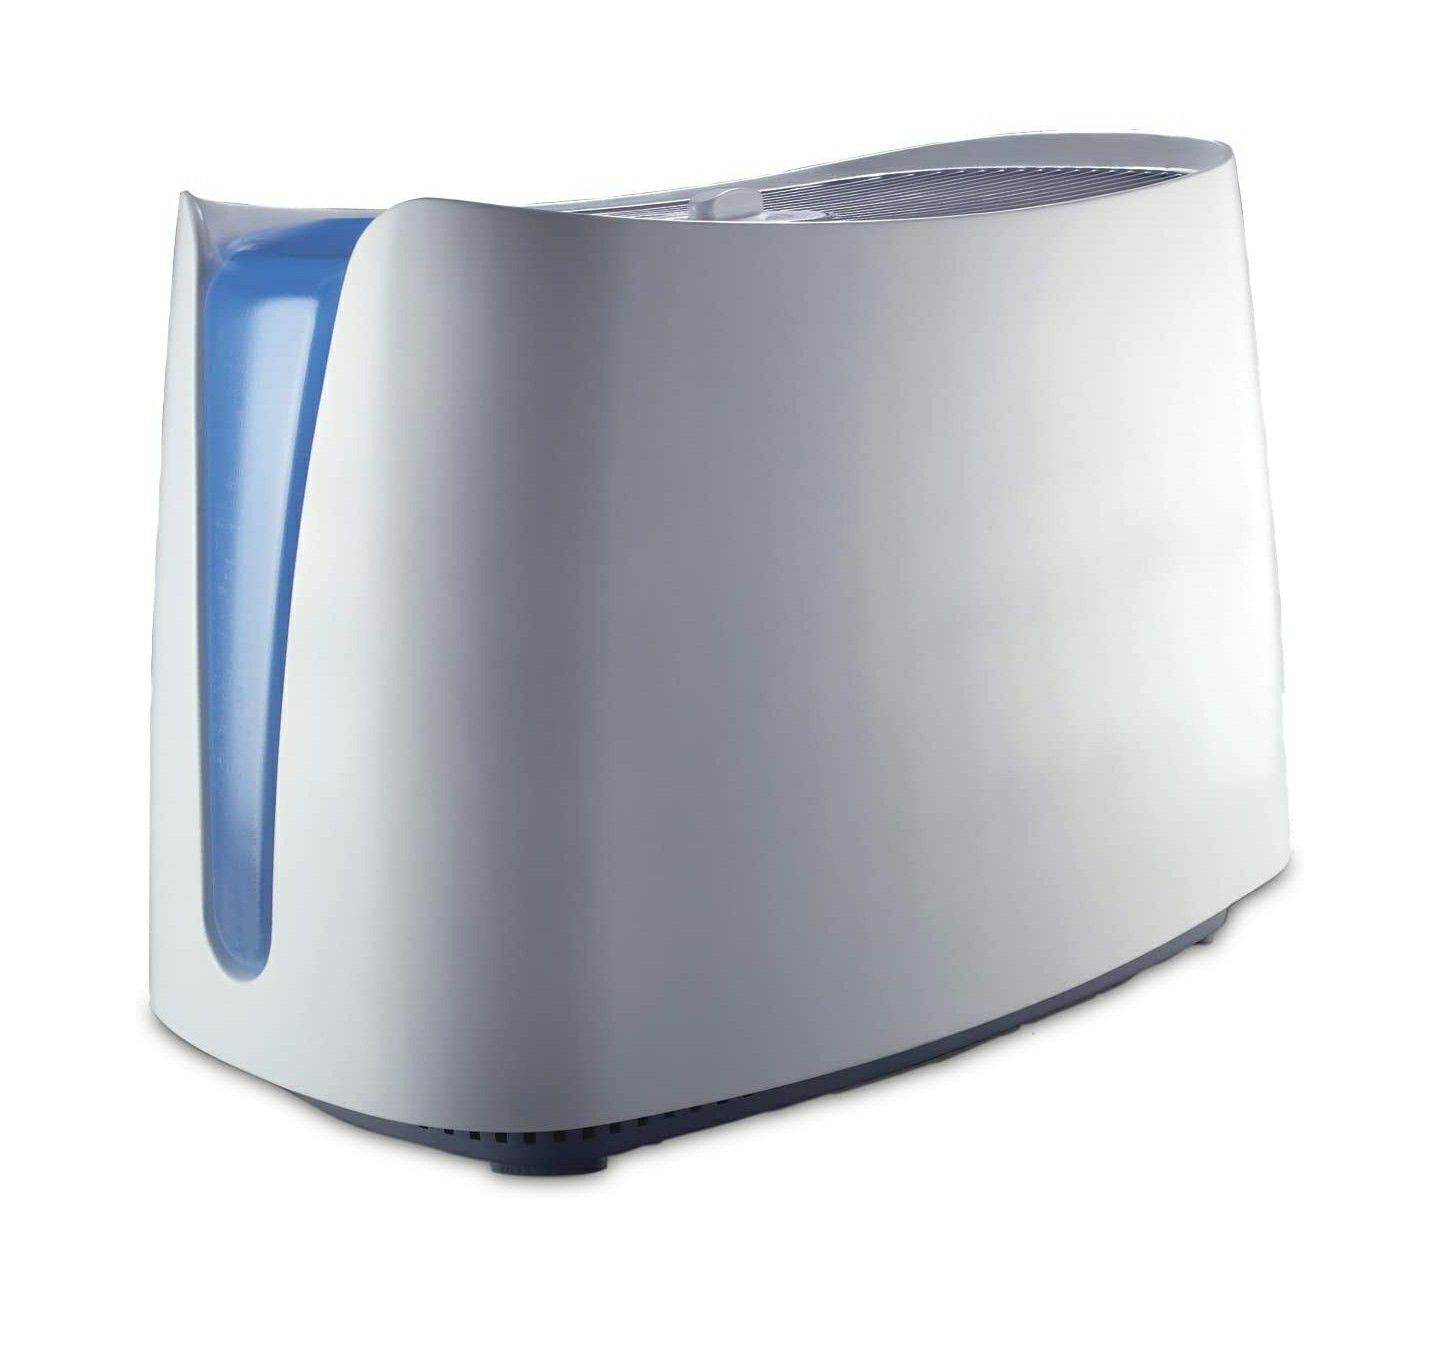 Honeywell HCM350W Germ Free Cool Mist Humidifier White